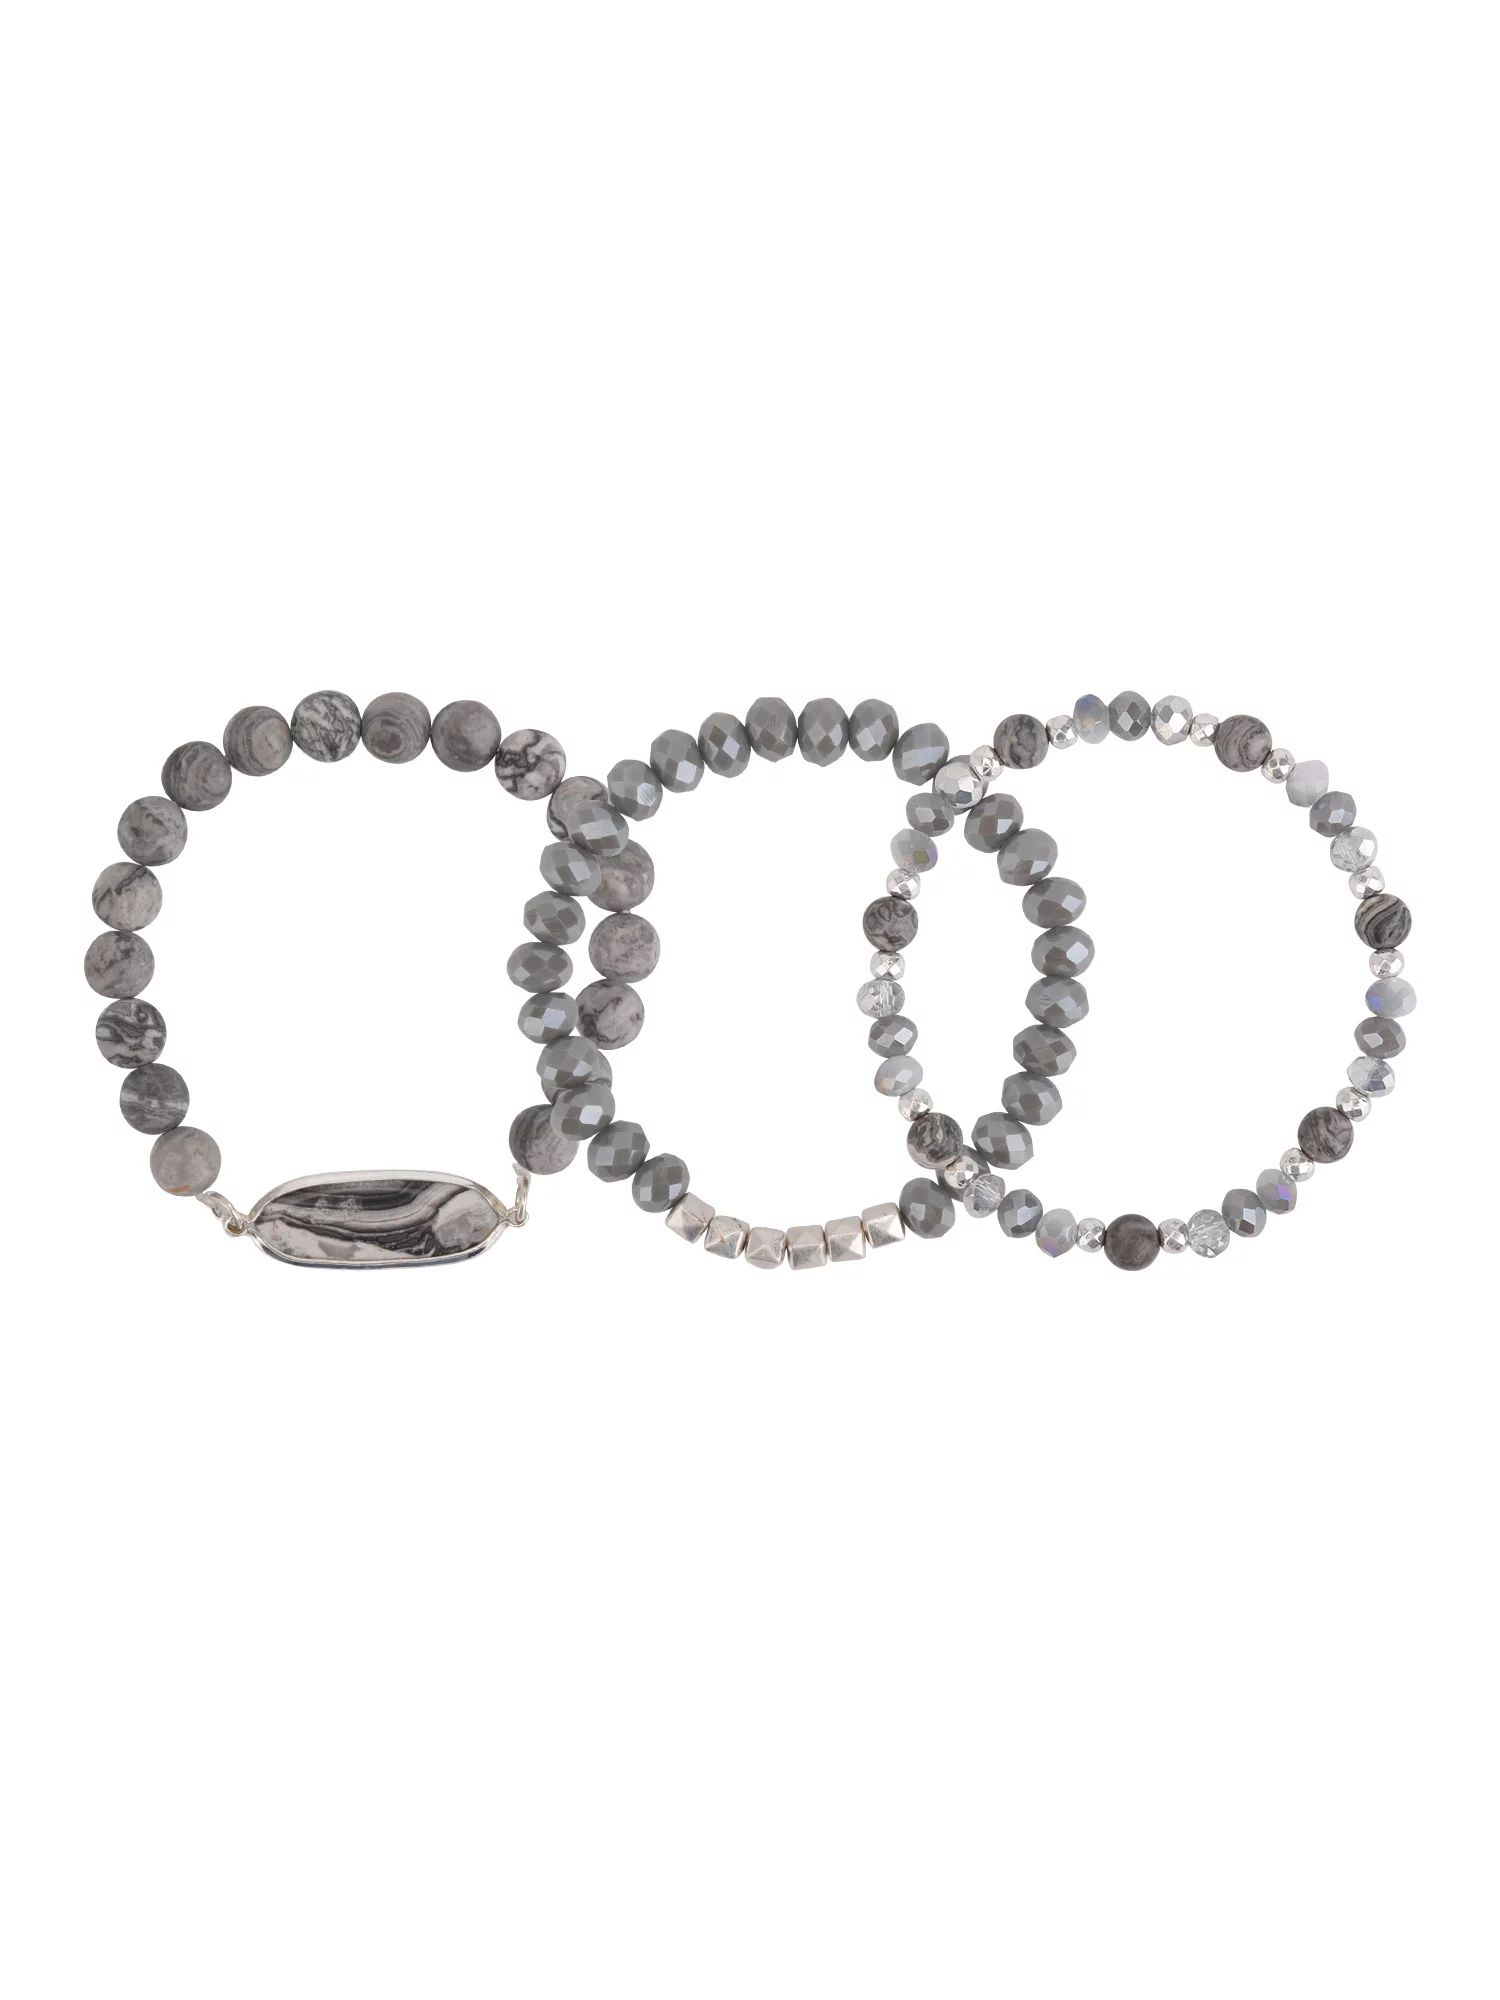 The Pioneer Woman - Women's Jewelry, Soft Silver-tone Bracelet Set with Genuine Stone | Walmart (US)